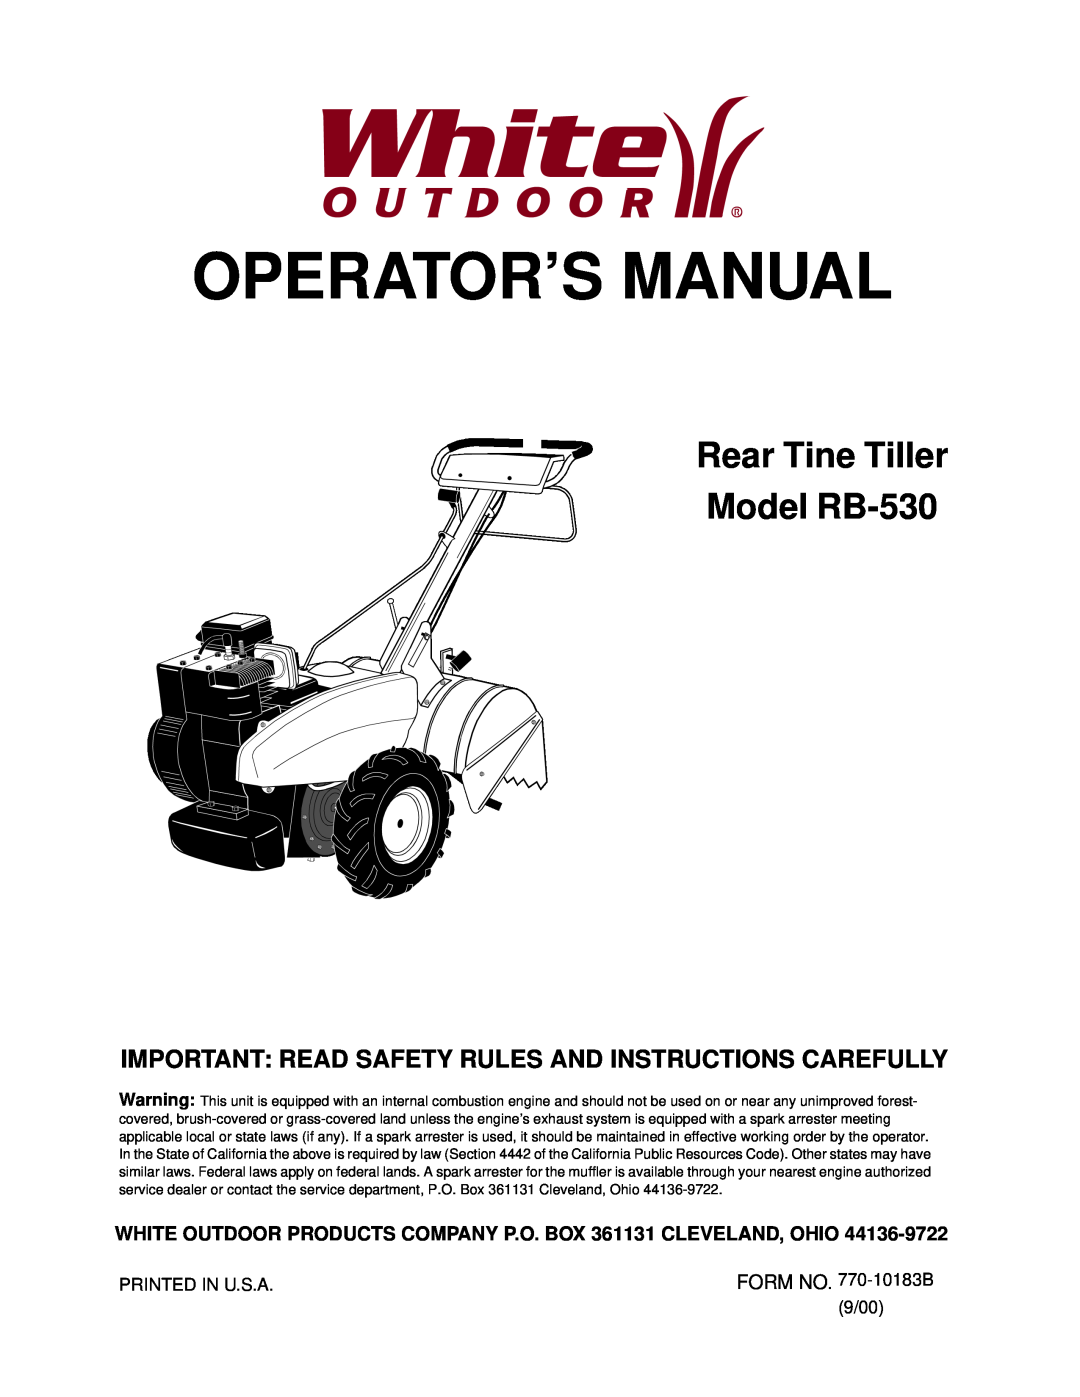 White Outdoor manual Operator’S Manual, Rear Tine Tiller Model RB-530 